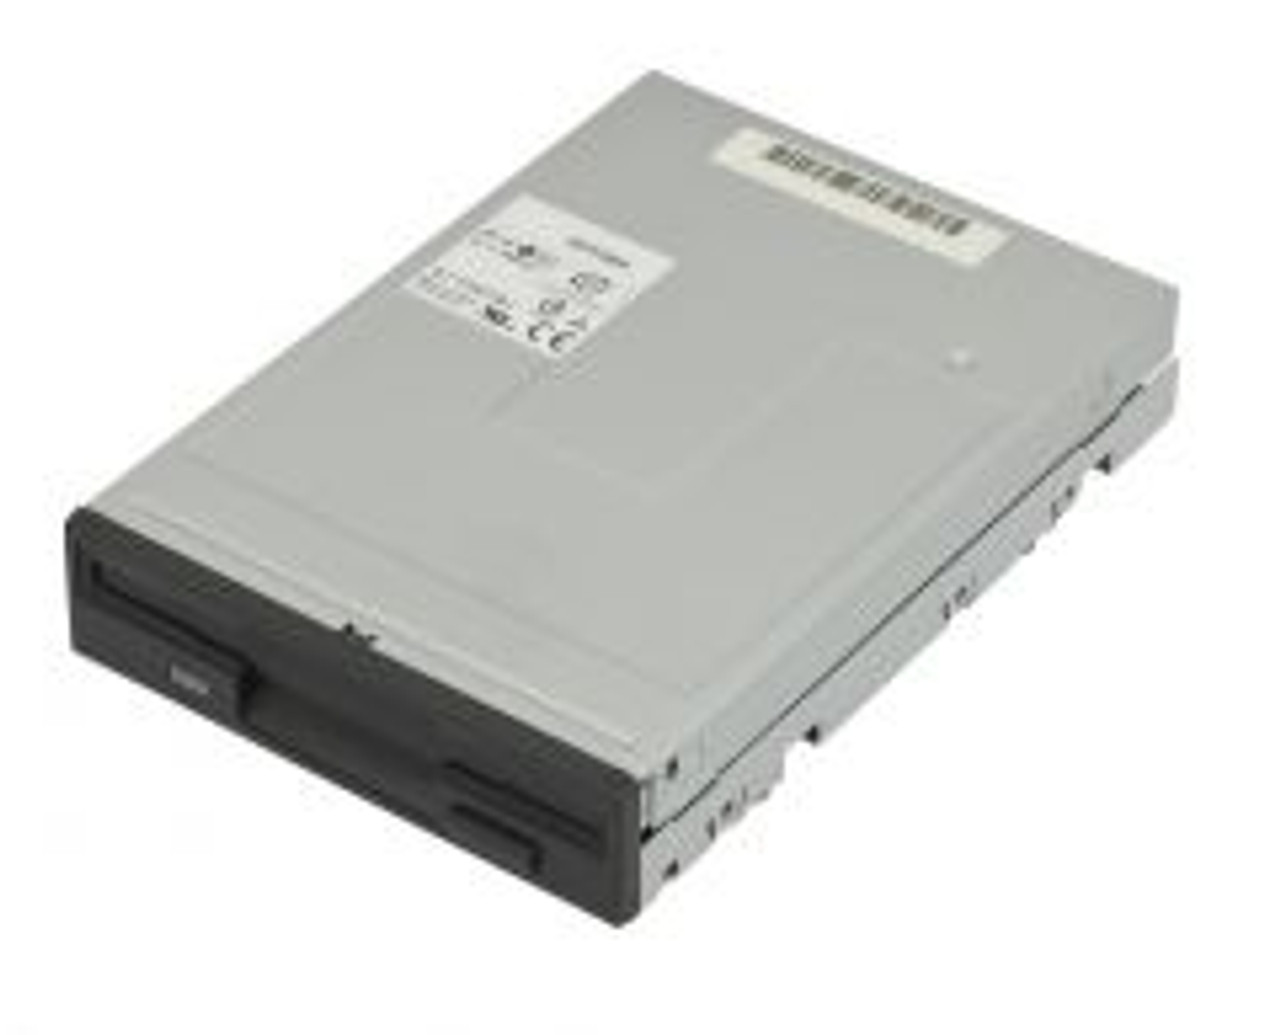 237180-001 | HP | 1.44MB 3.5-inch Floppy Drive